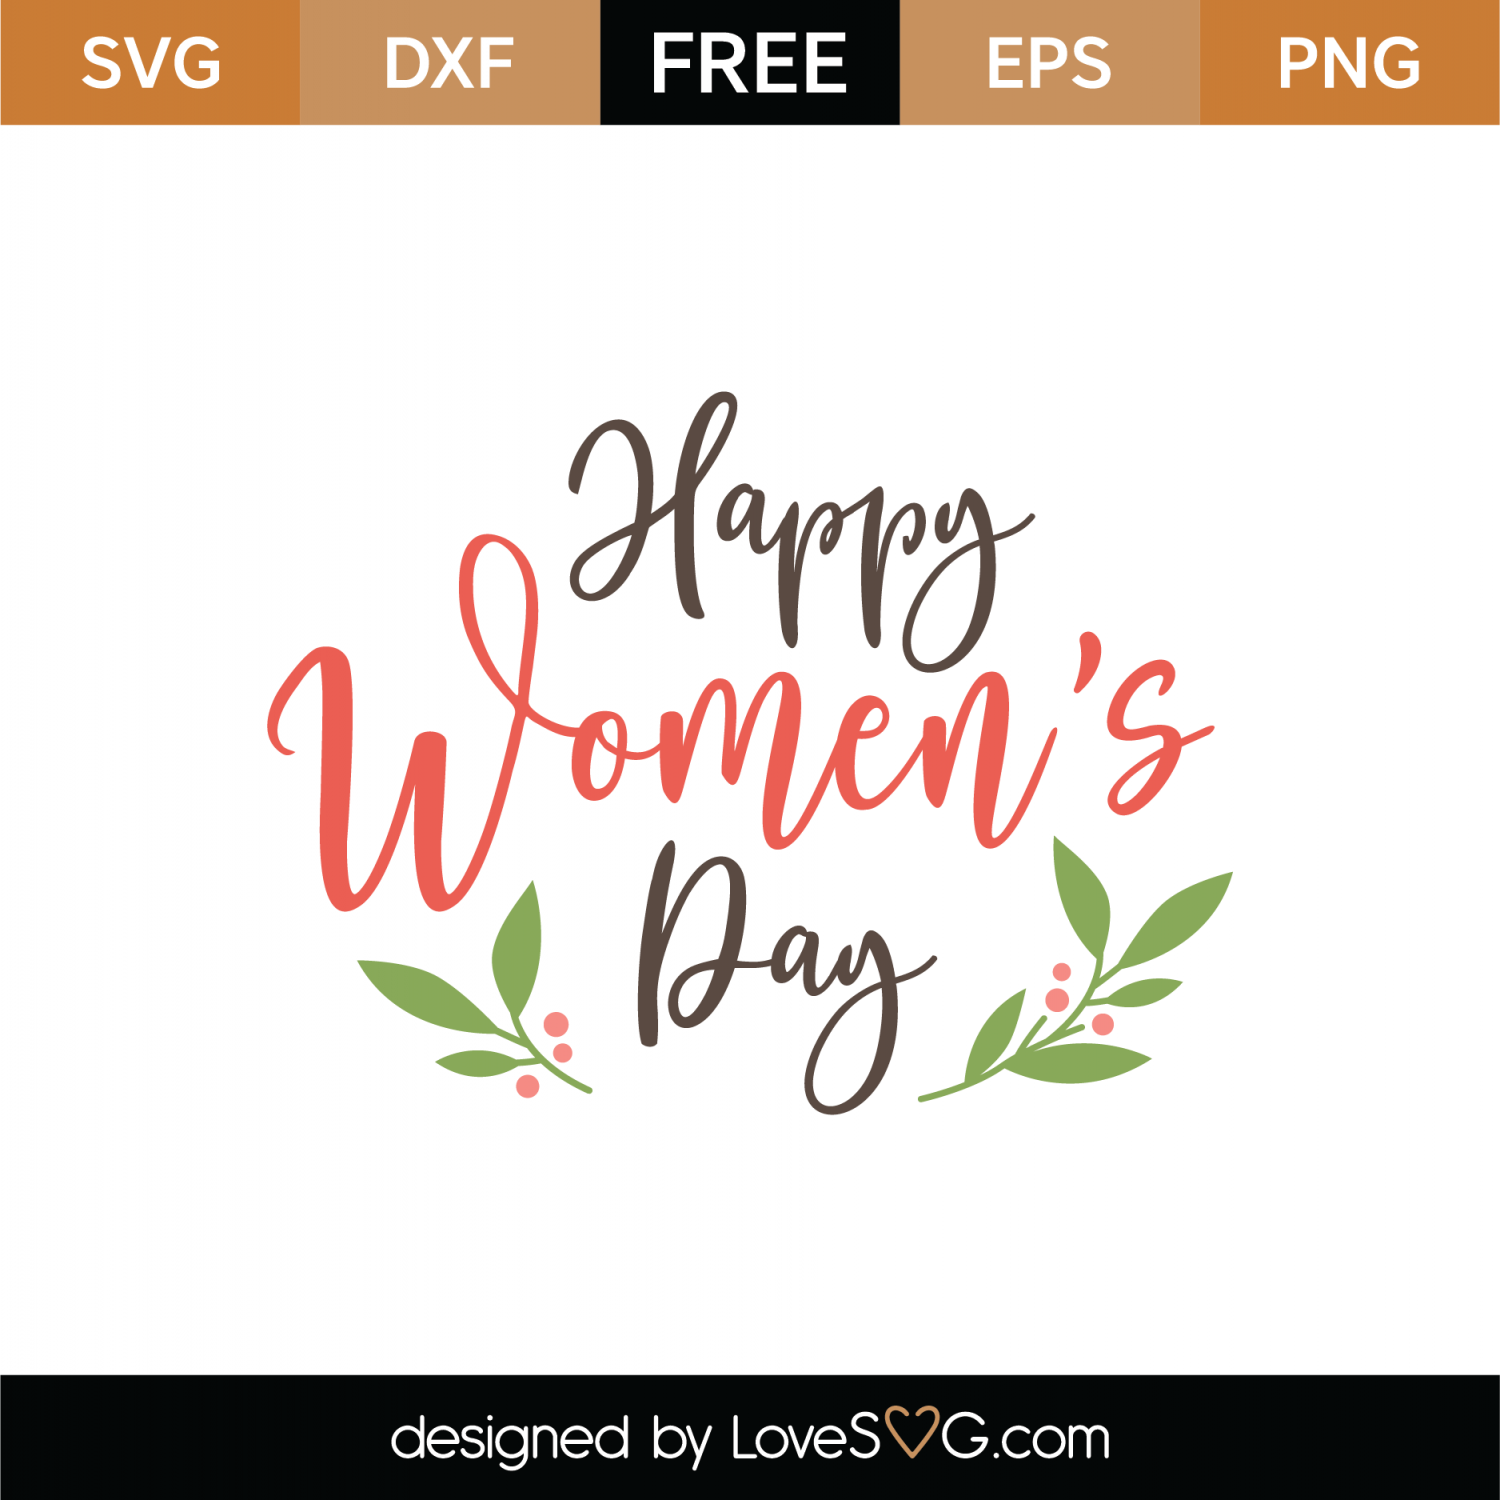 Download Free Happy Women's Day SVG Cut File | Lovesvg.com